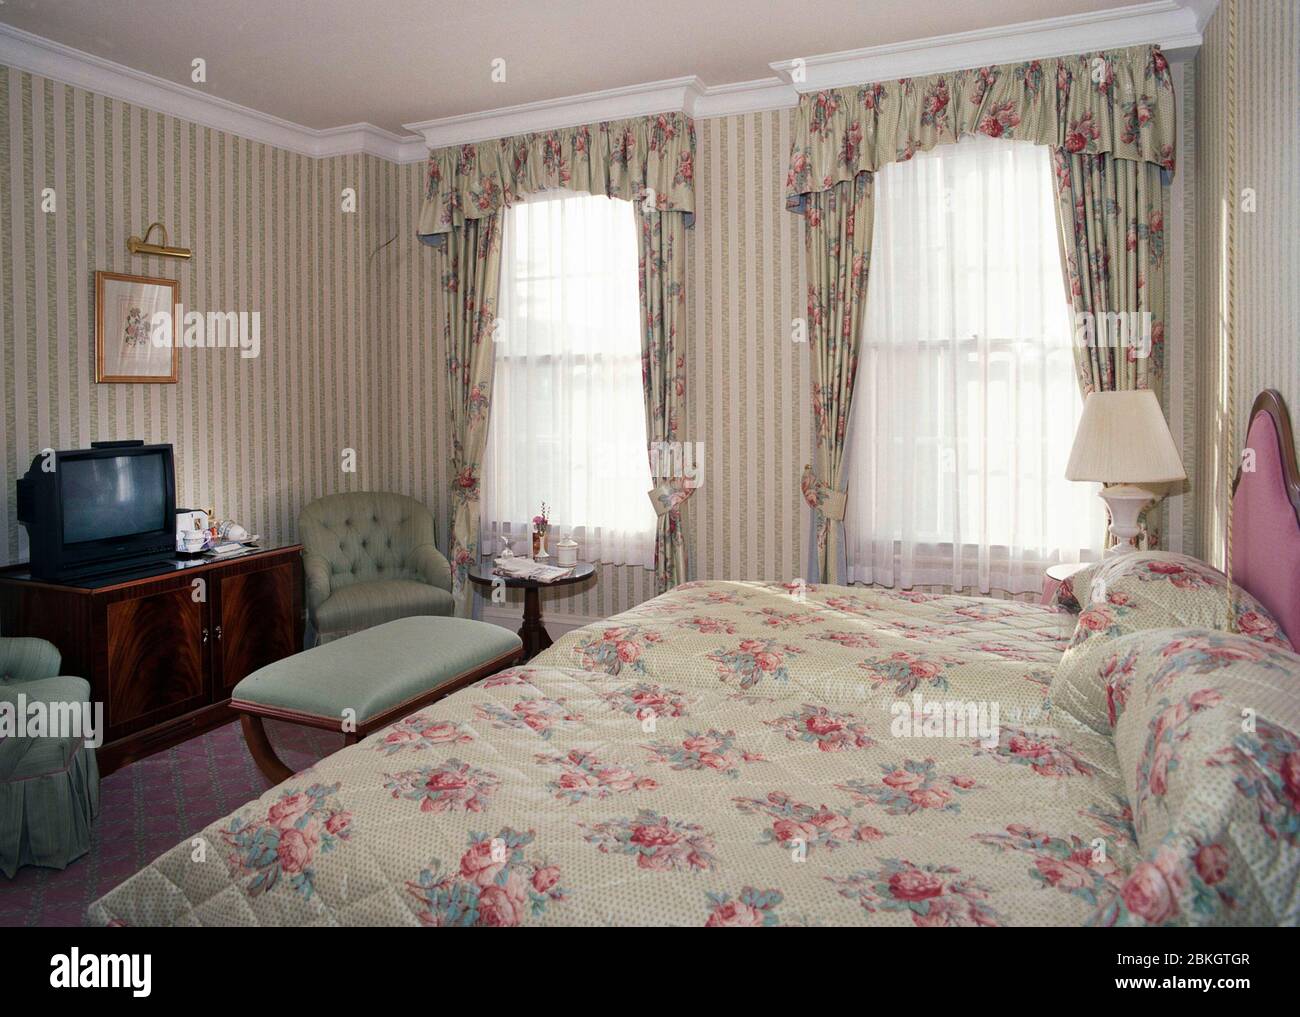 room-interiors-in-1991-of-the-then-new-swallow-hotel-birmingham-west-midlands-england-2BKGTGR.jpg